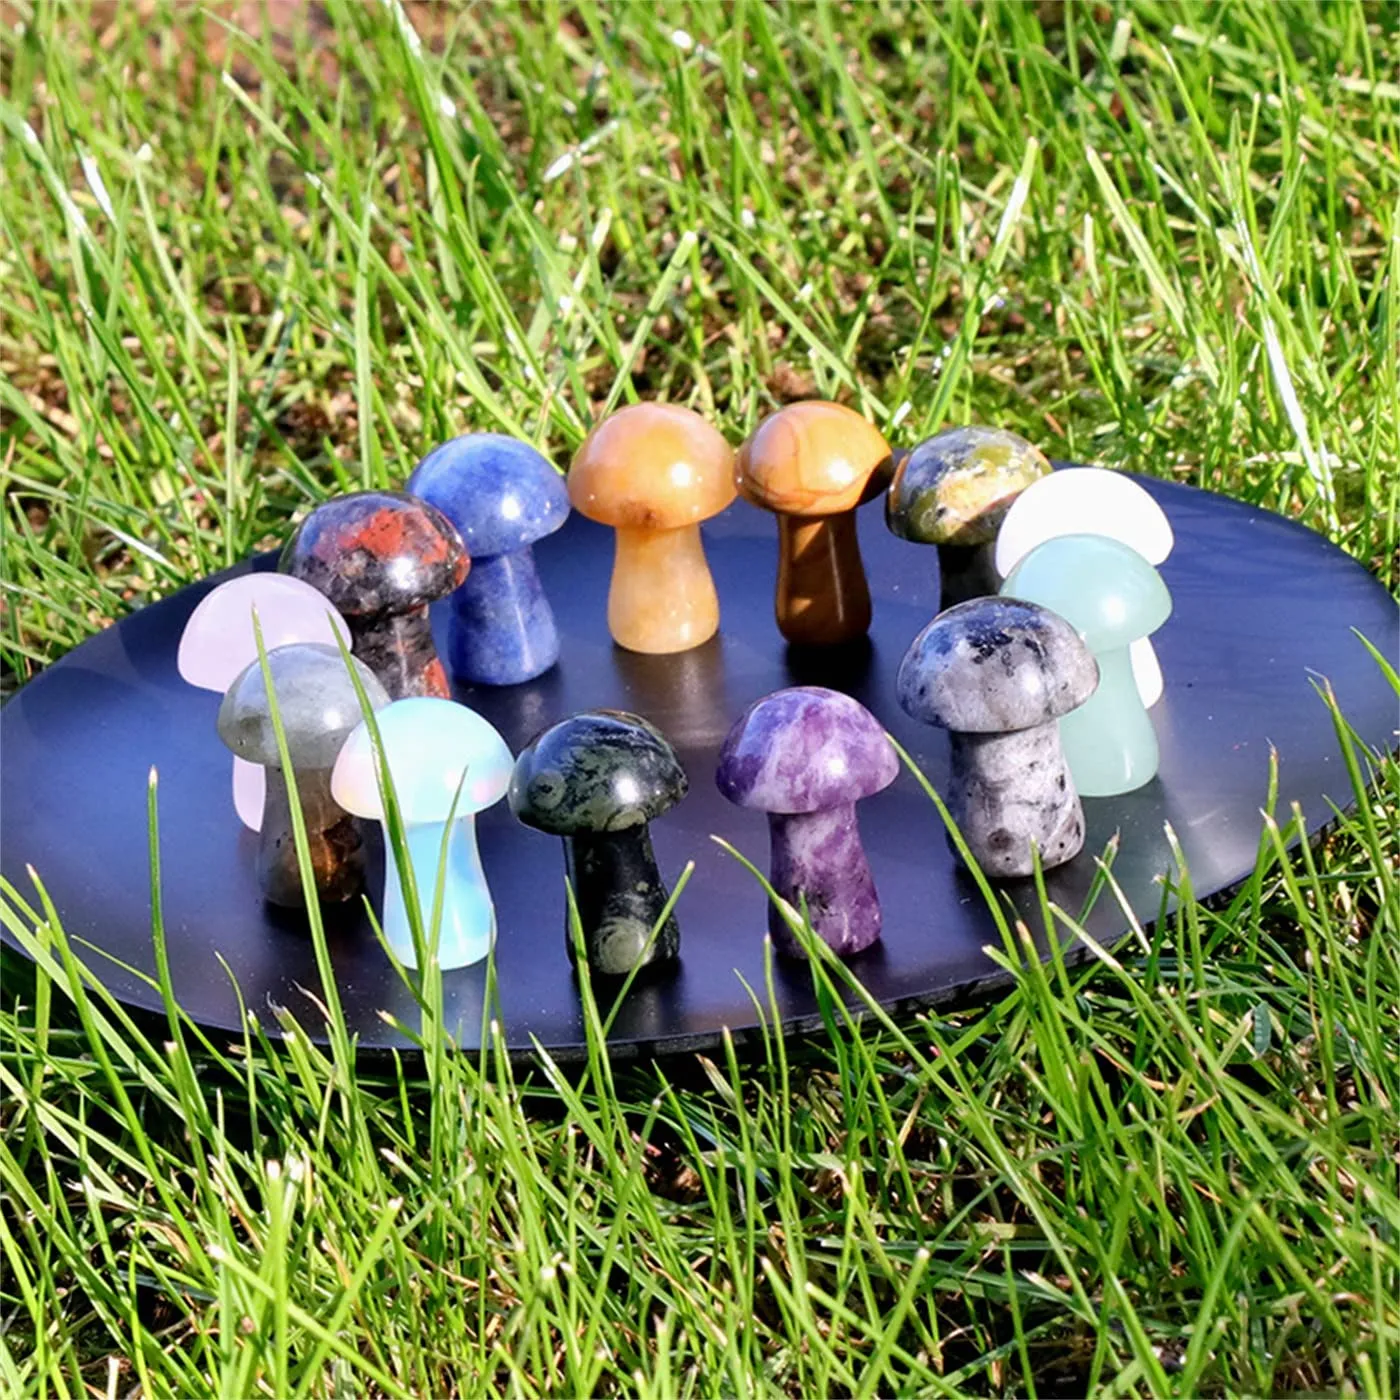 mushroom decor healing crystals stones sculpture quartz natural gemstone meditation balancing mini mushrooms crystal for hand making diy garden lawn home flower pot decoration